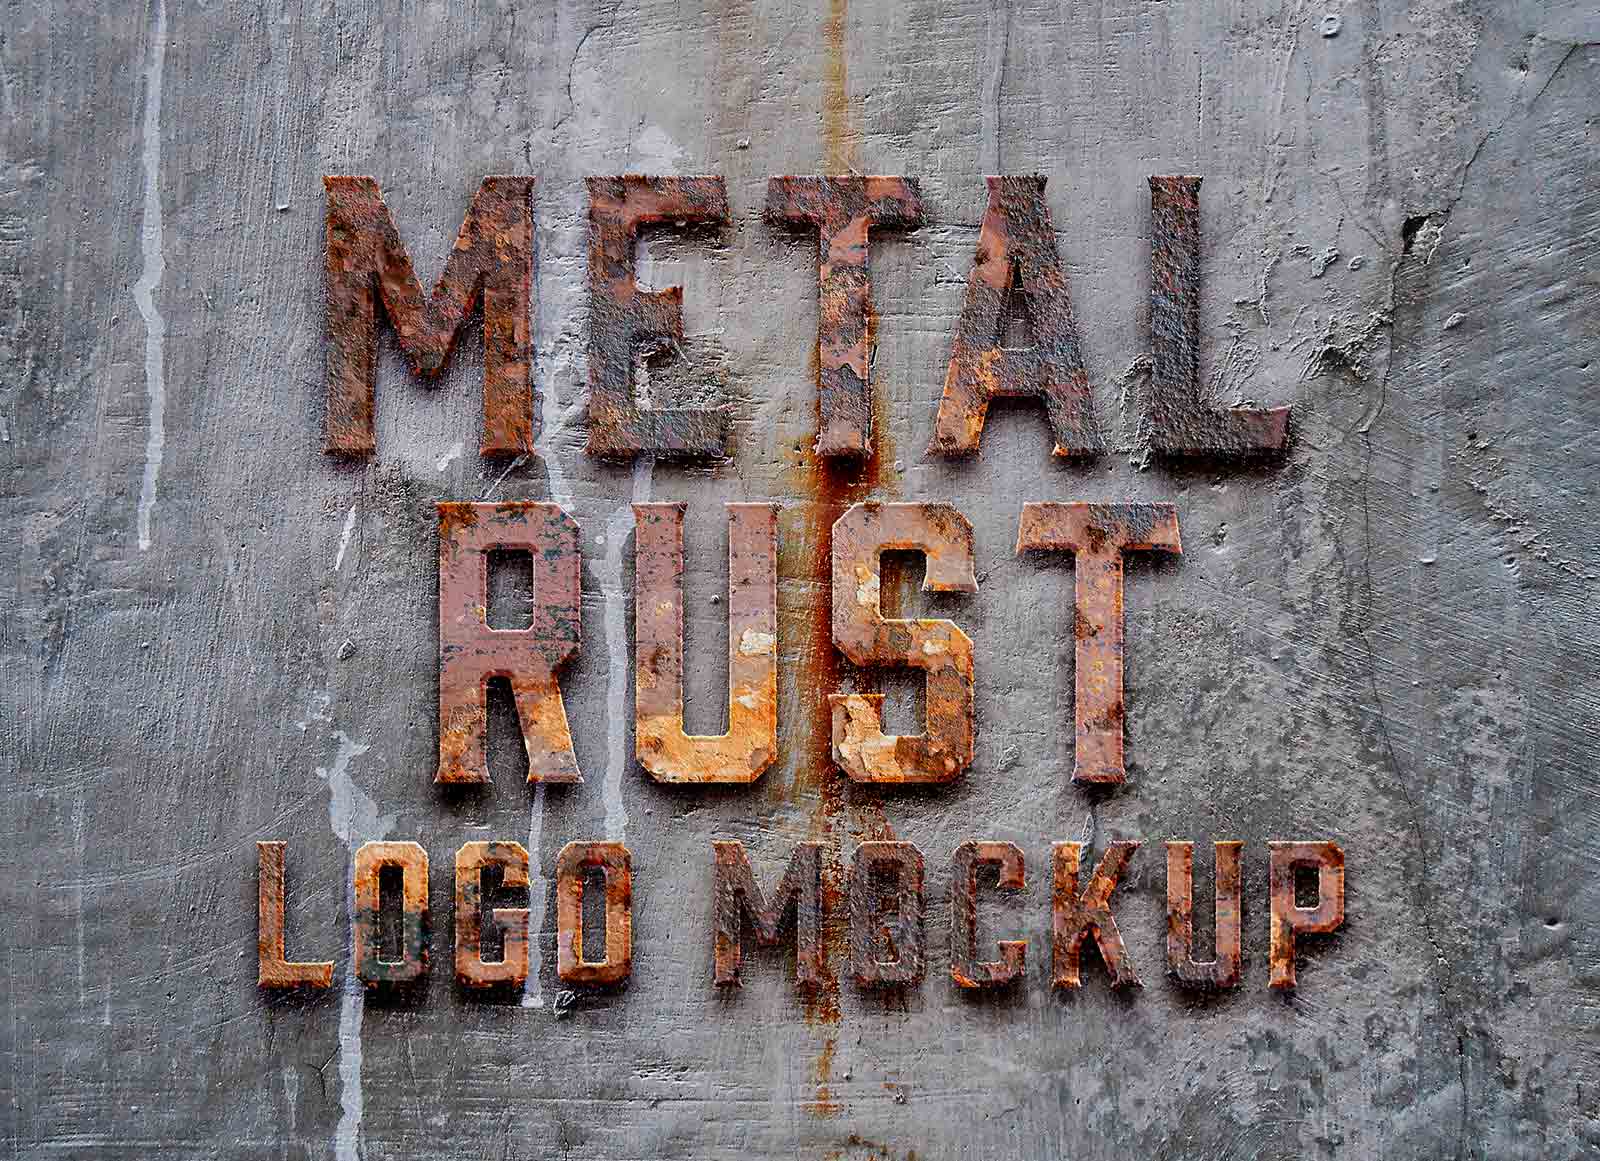 Free-Metal-Rust-Logo-Mockup-PSD